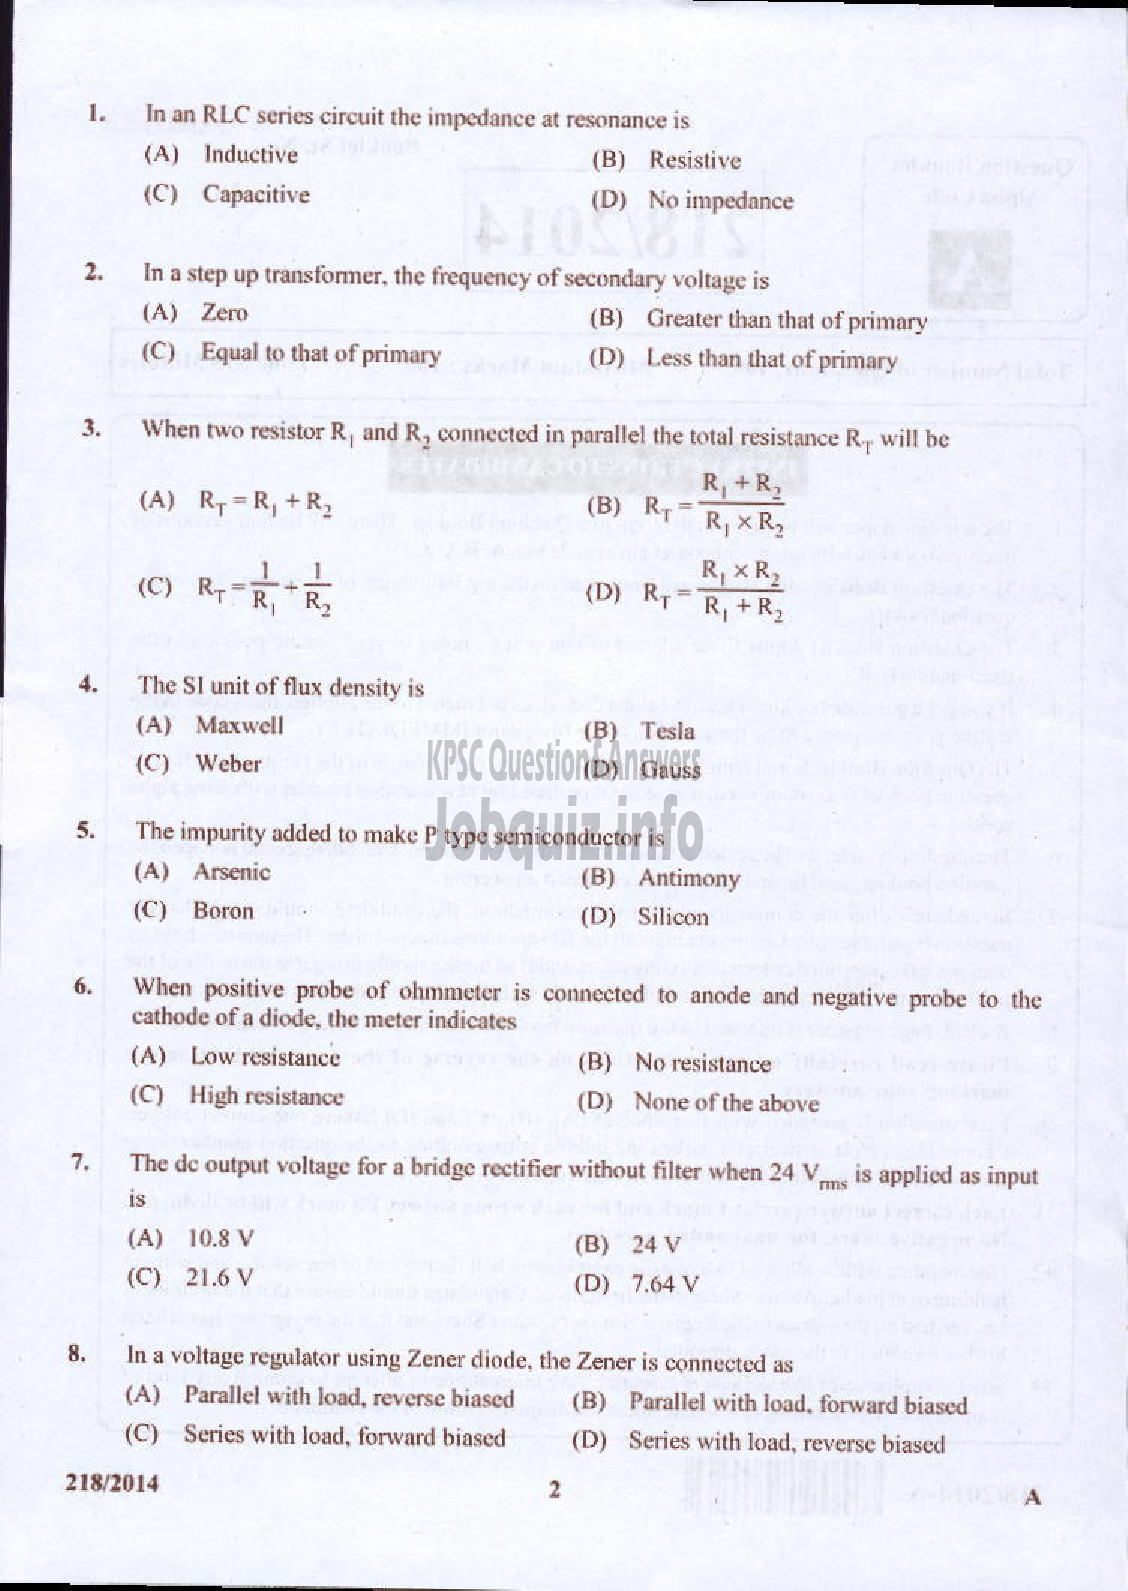 Kerala PSC Question Paper - LABORATORY TECHNICAL ASSISTANT MRRTV VHSE-2